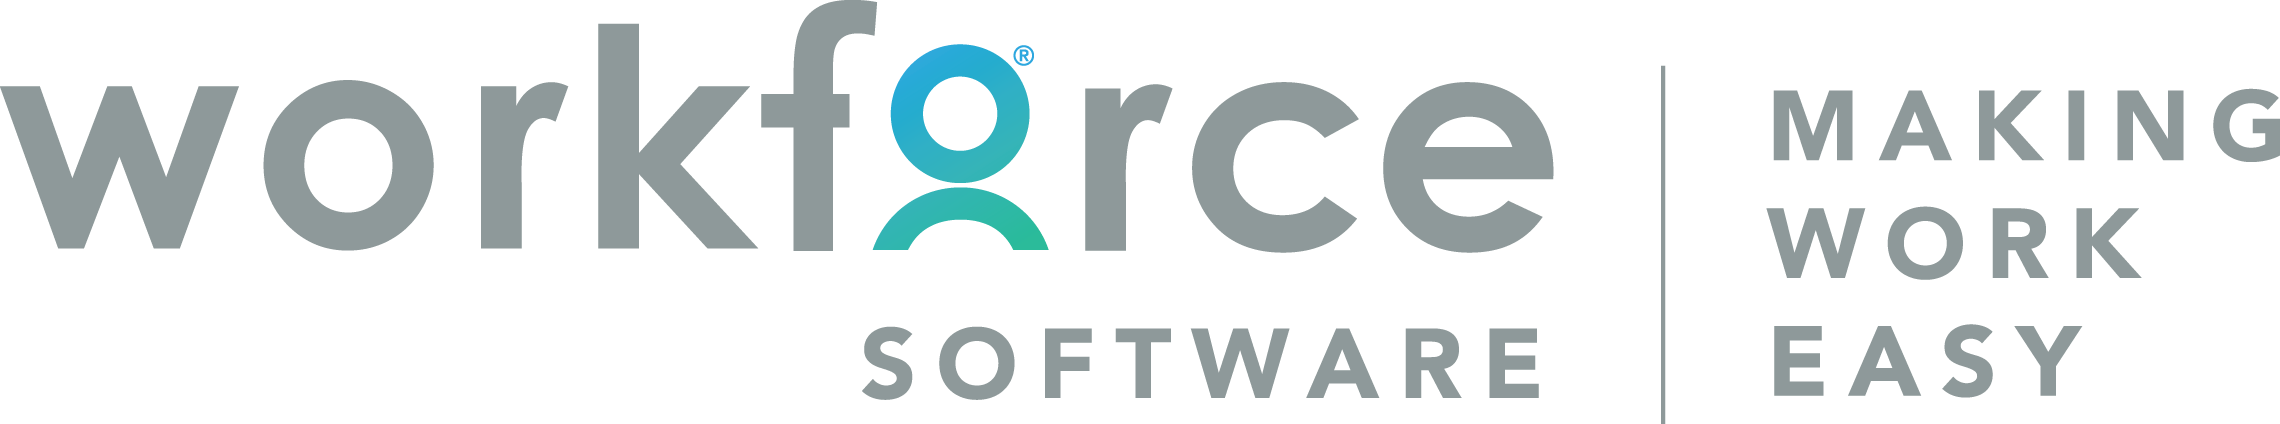 WorkForce Software logo